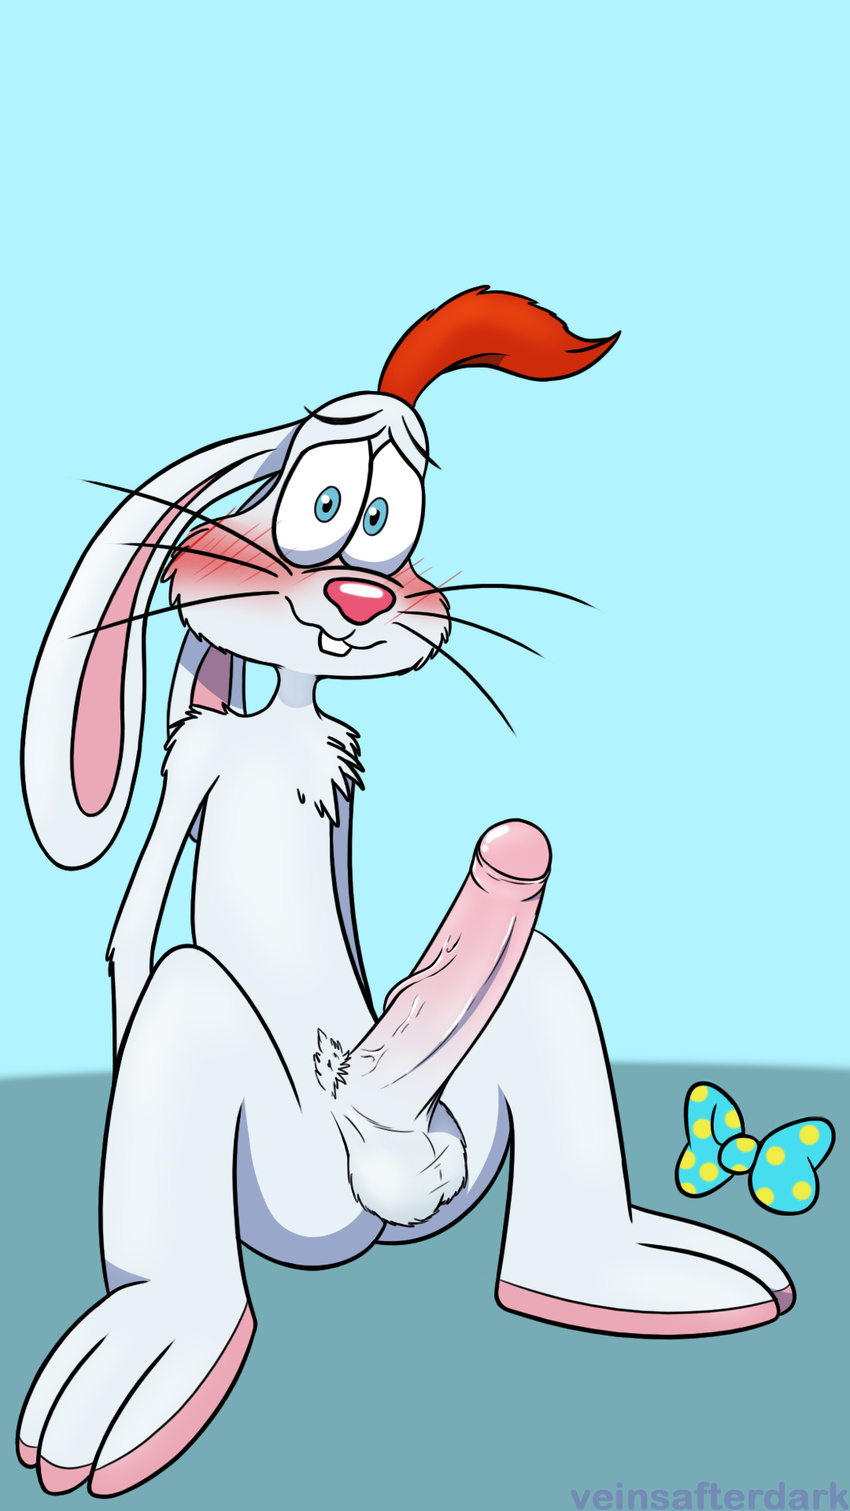 blush disney erection lagomorph male mammal rabbit roger_rabbit solo veinsafterdark who_framed_roger_rabbit